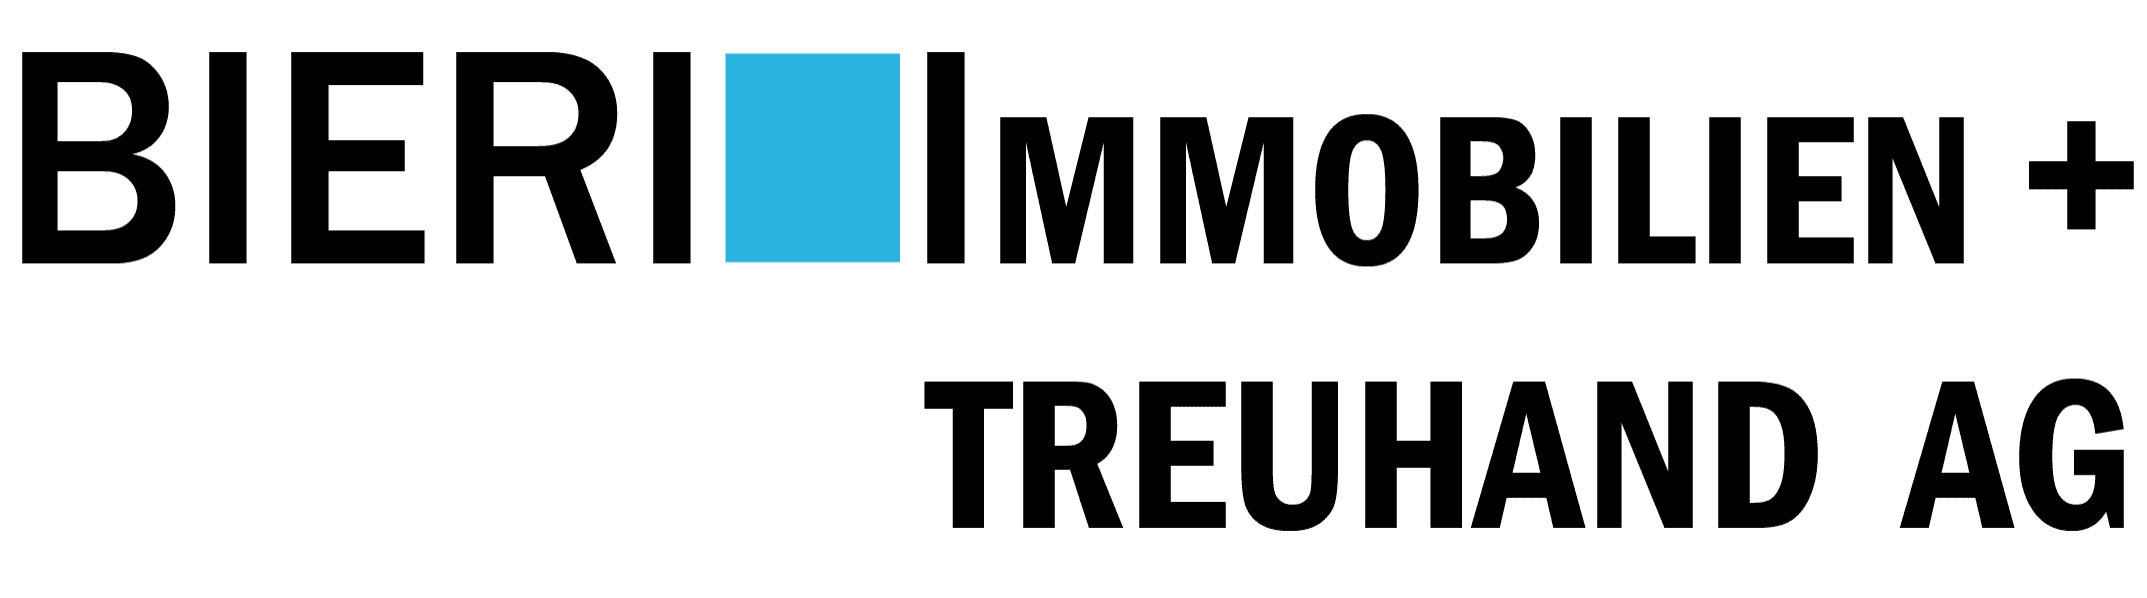 Bieri Immobilien + Treuhand AG